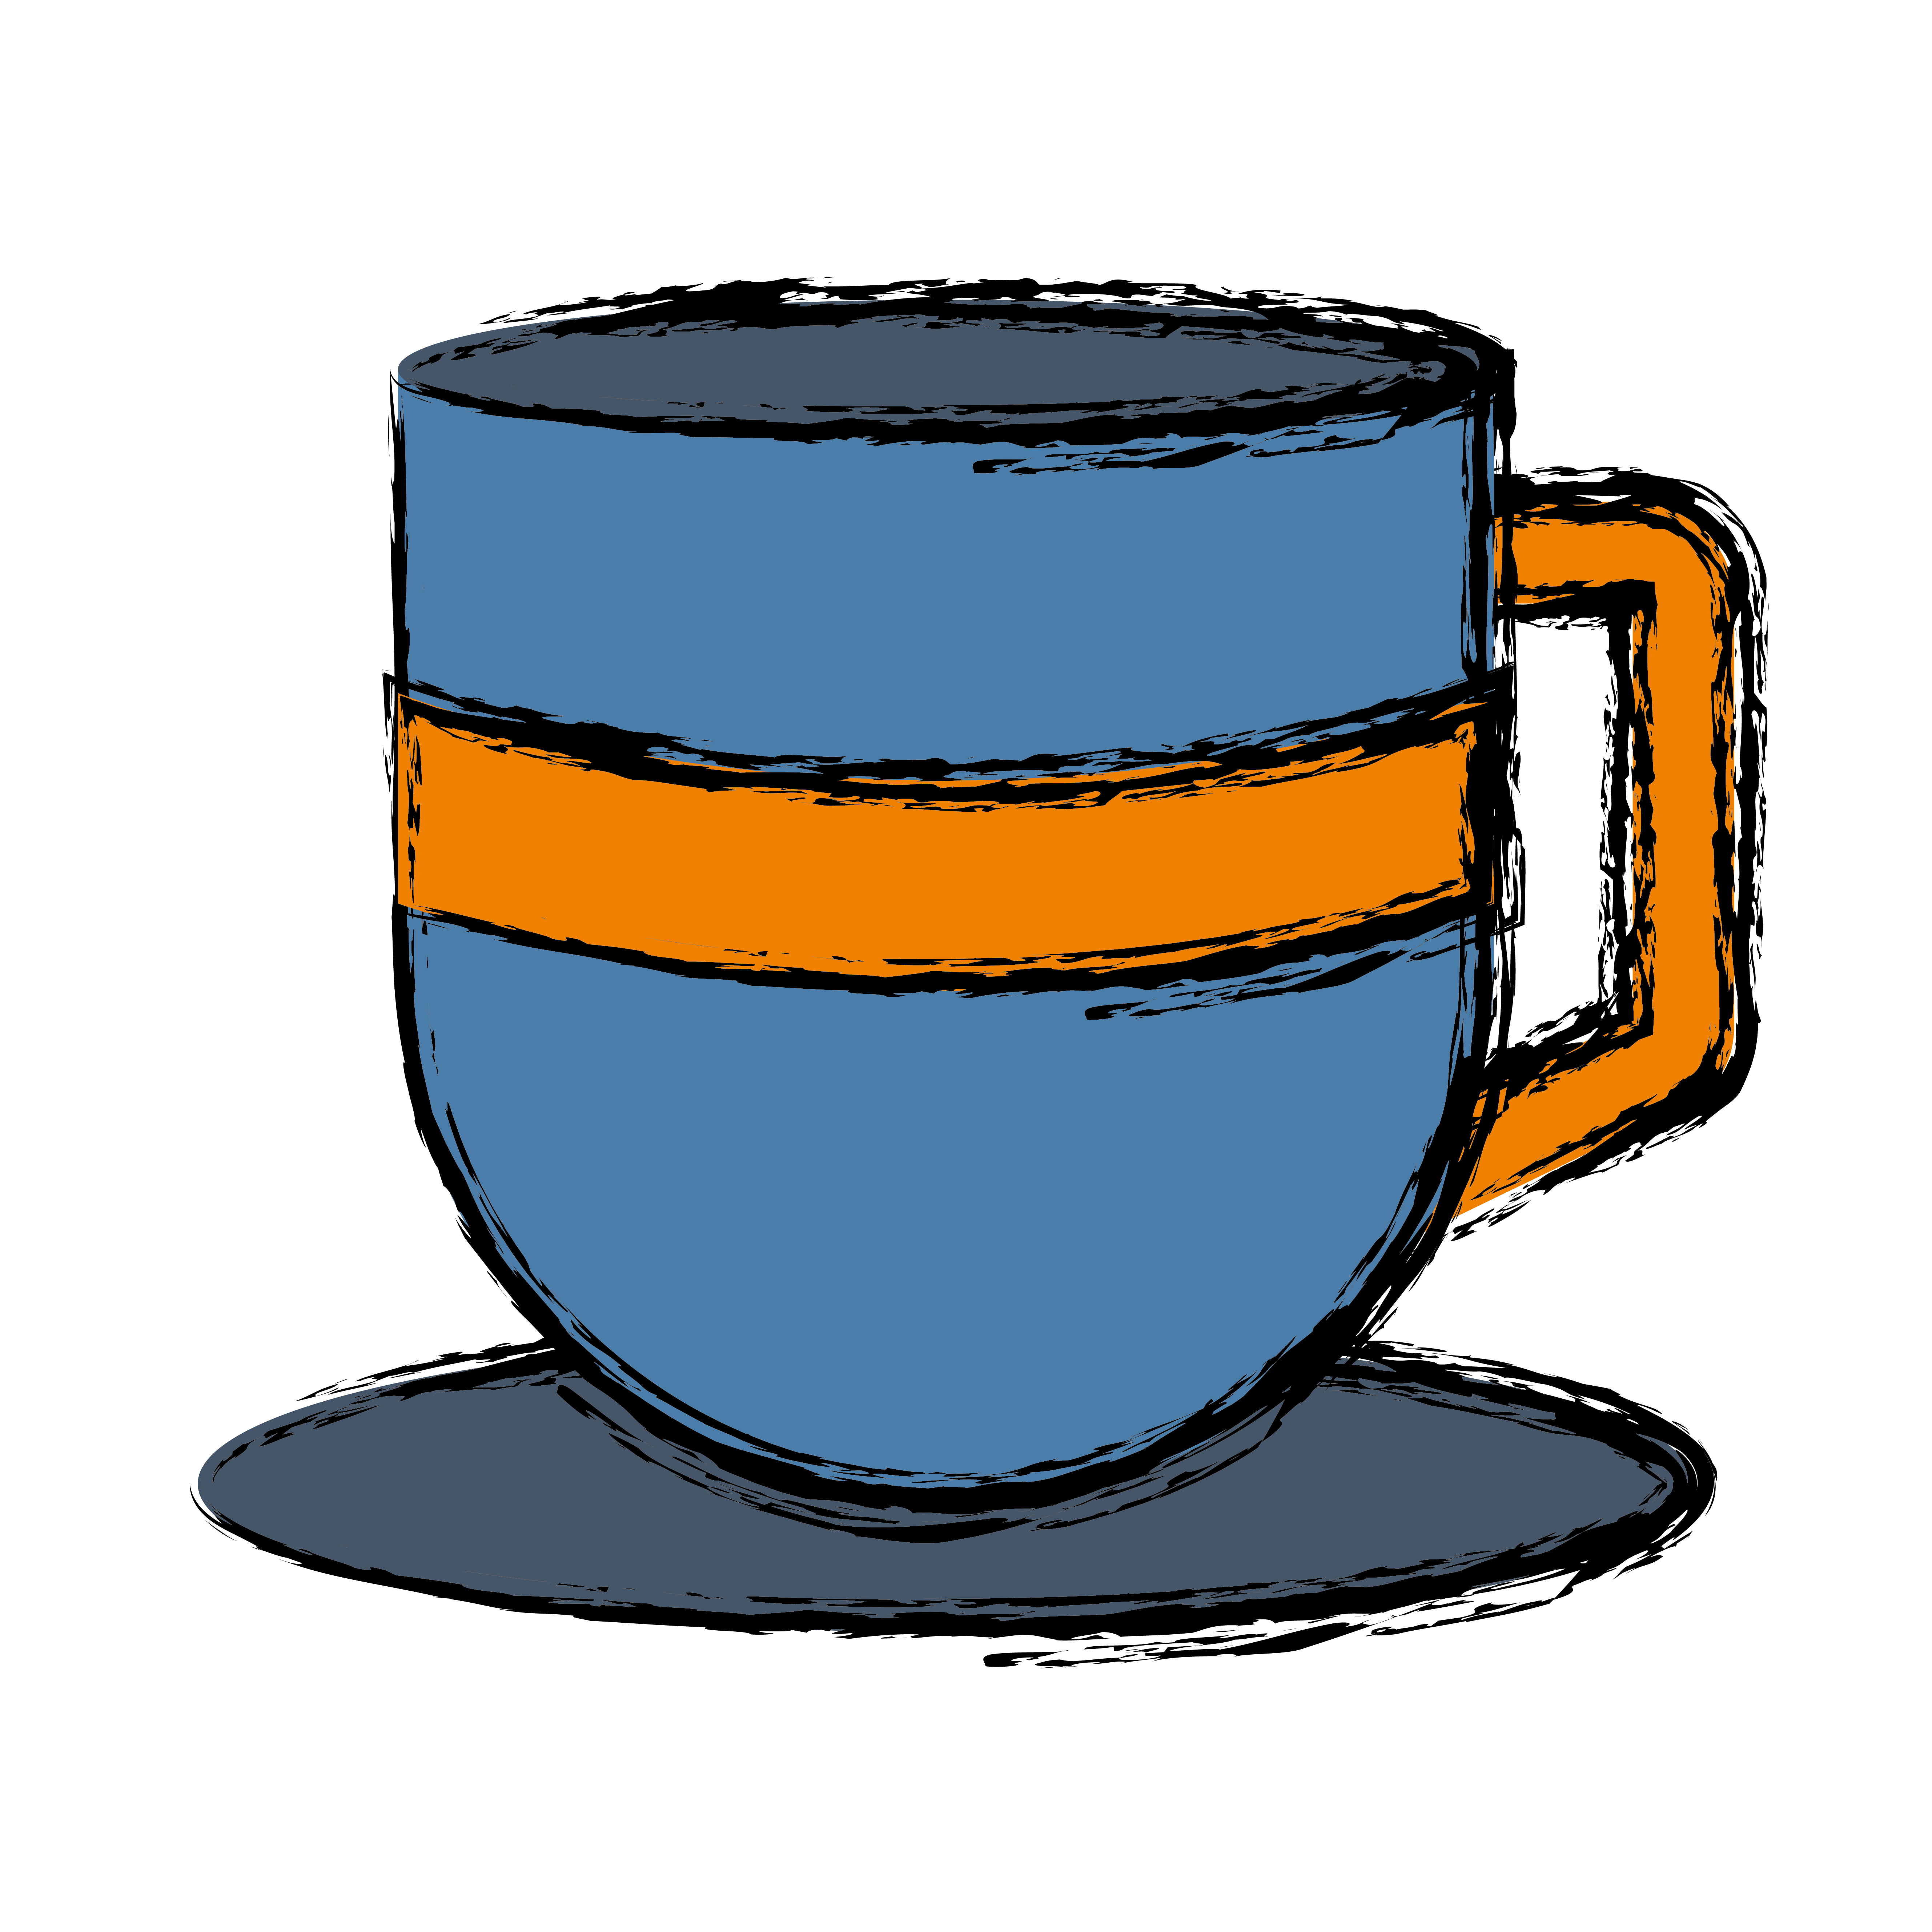 Download coffee mug icon - Download Free Vectors, Clipart Graphics & Vector Art